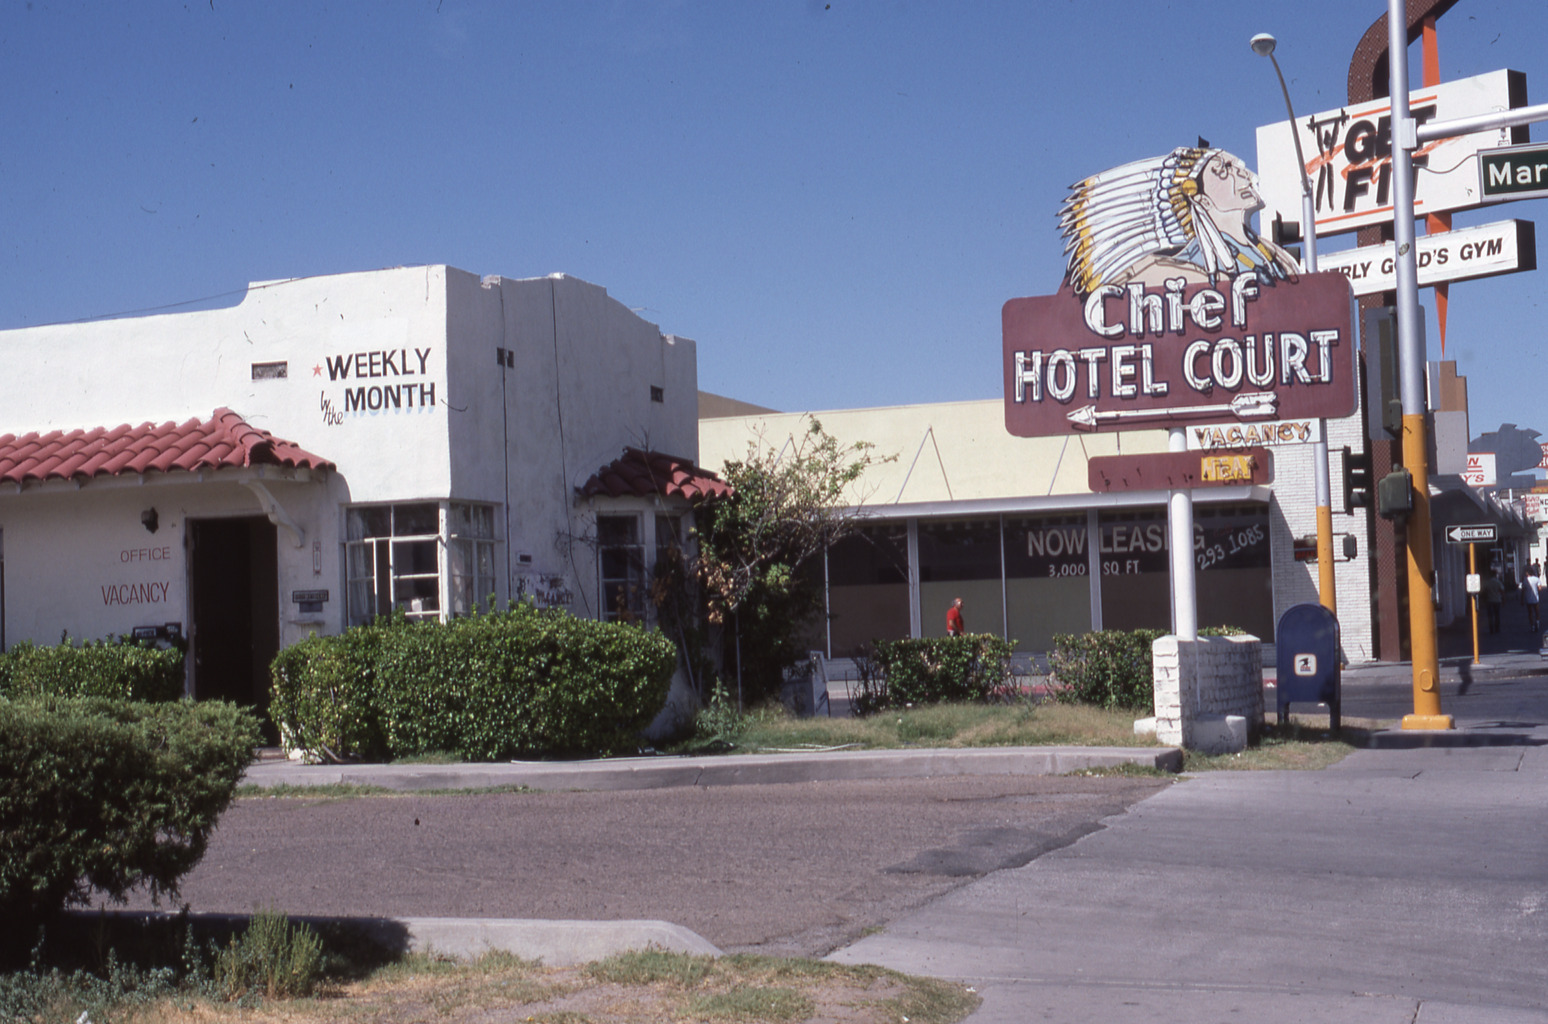 Chief Hotel Court flag mounted pylon sign, Las Vegas, Nevada: photographic print